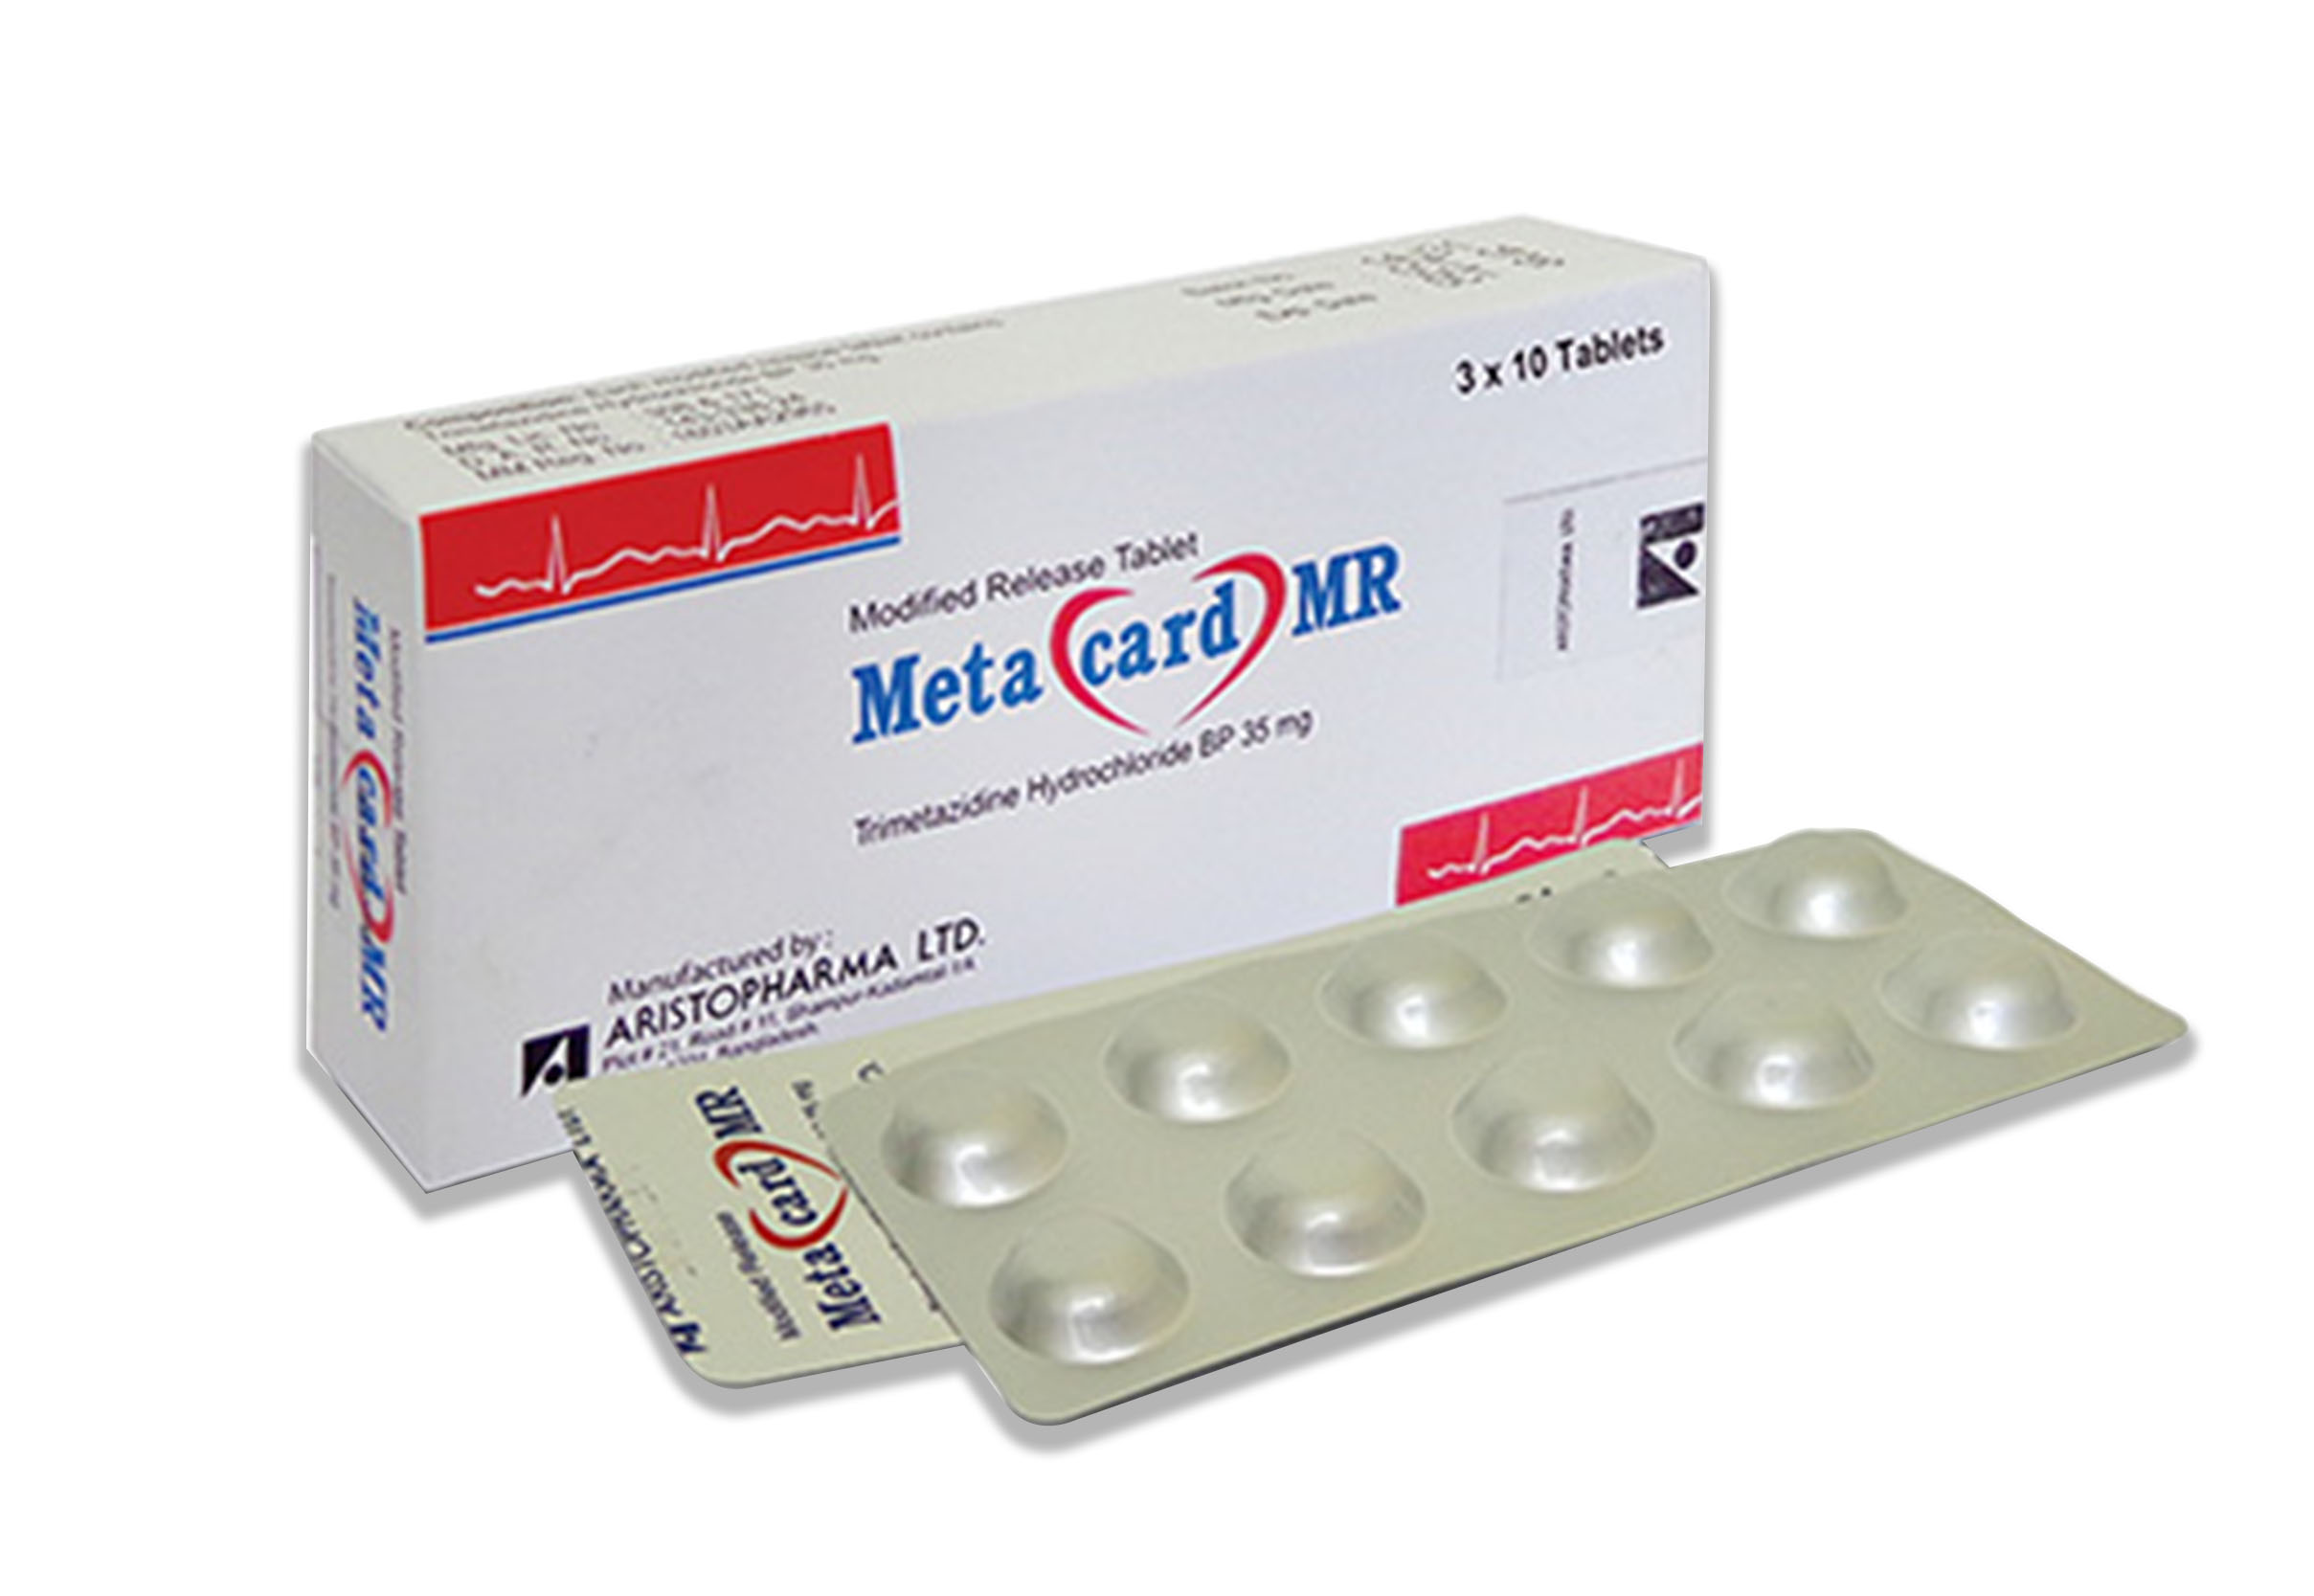 Metacard MR